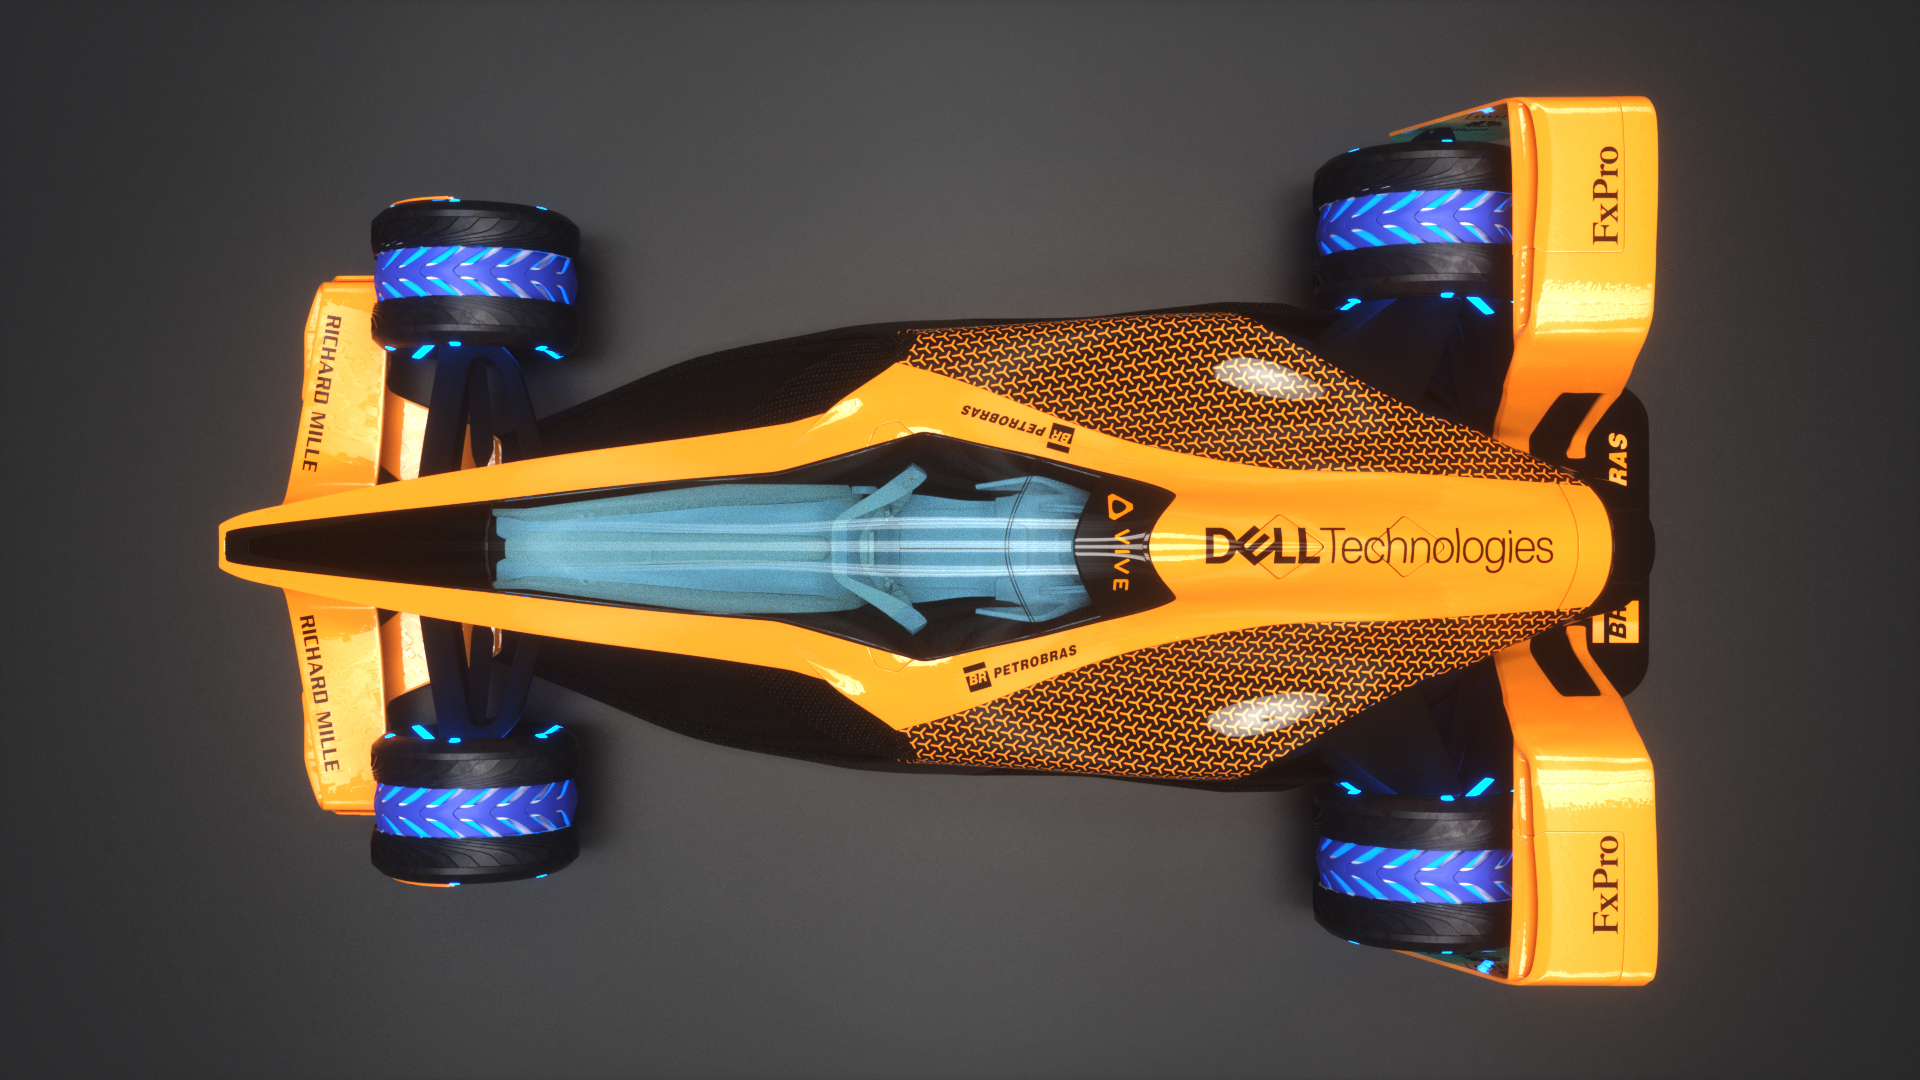 MCLExtreme: McLaren's Vision of Formula 1 in 2050